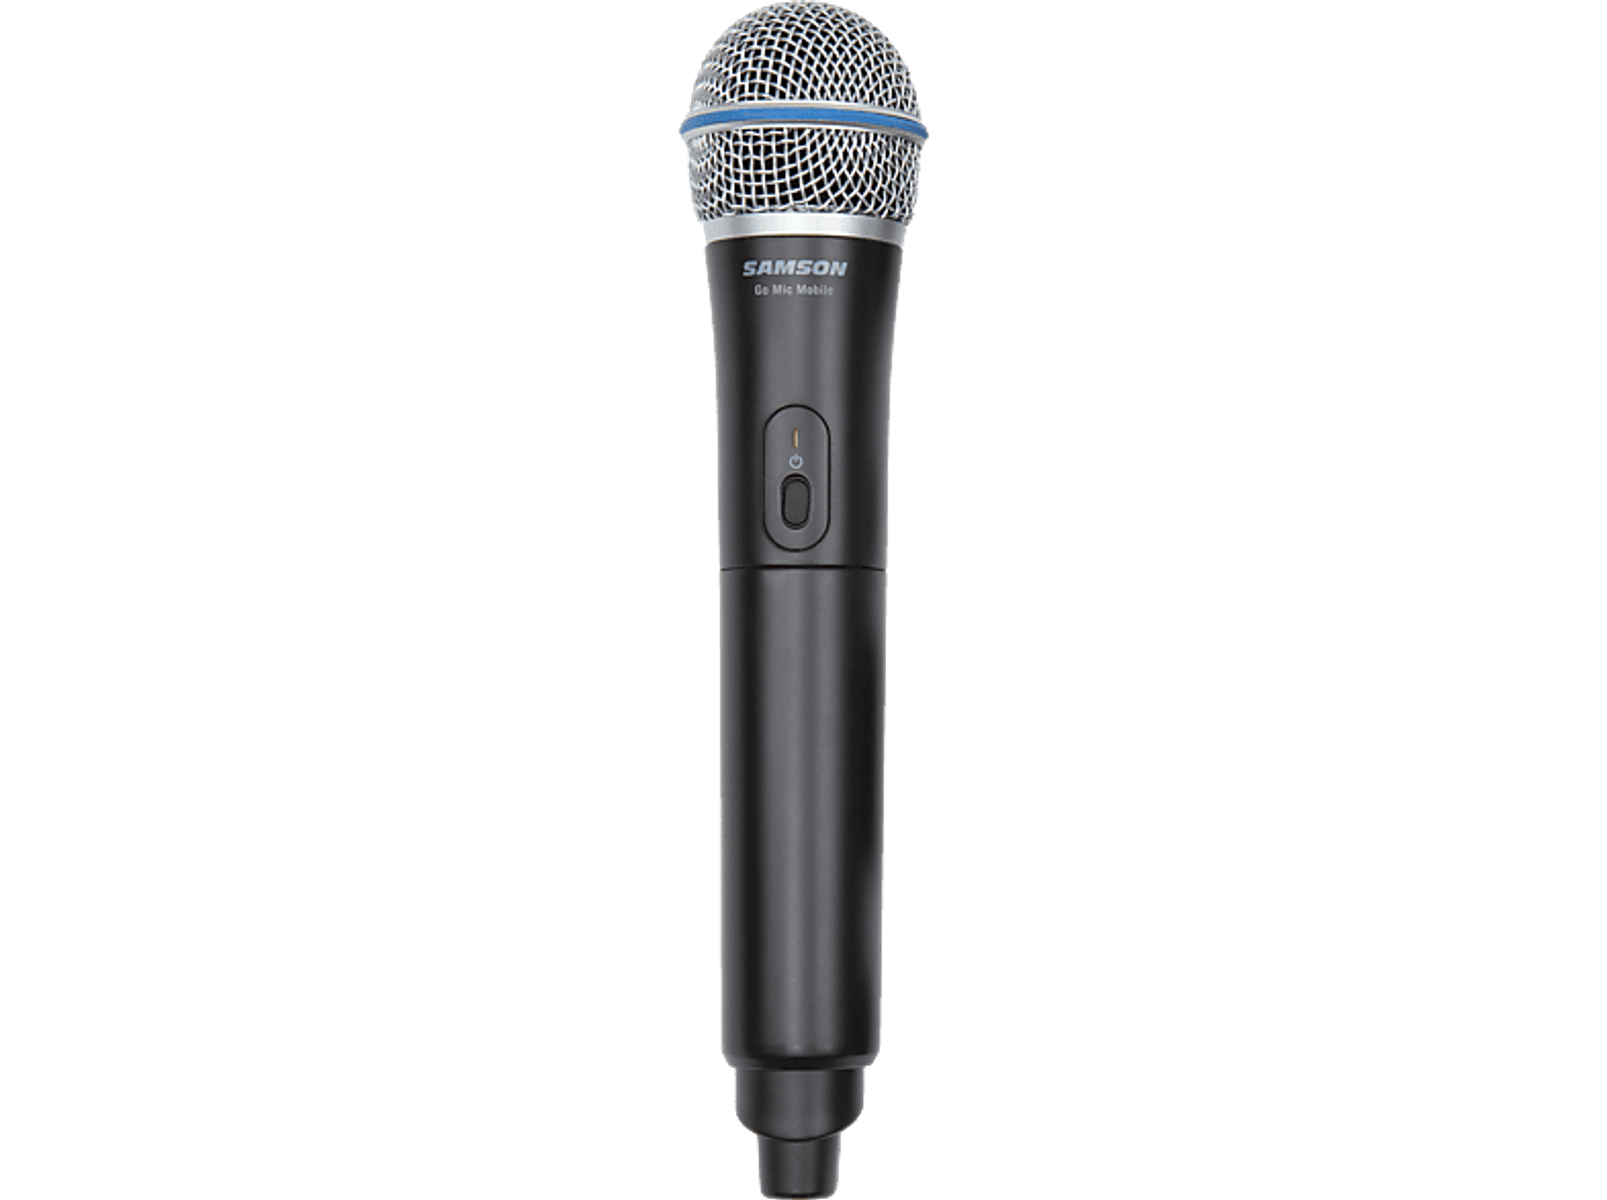 HANDHELD SAMSON Mikrofon MOBILE MIC 30-10028 Schwarz GO